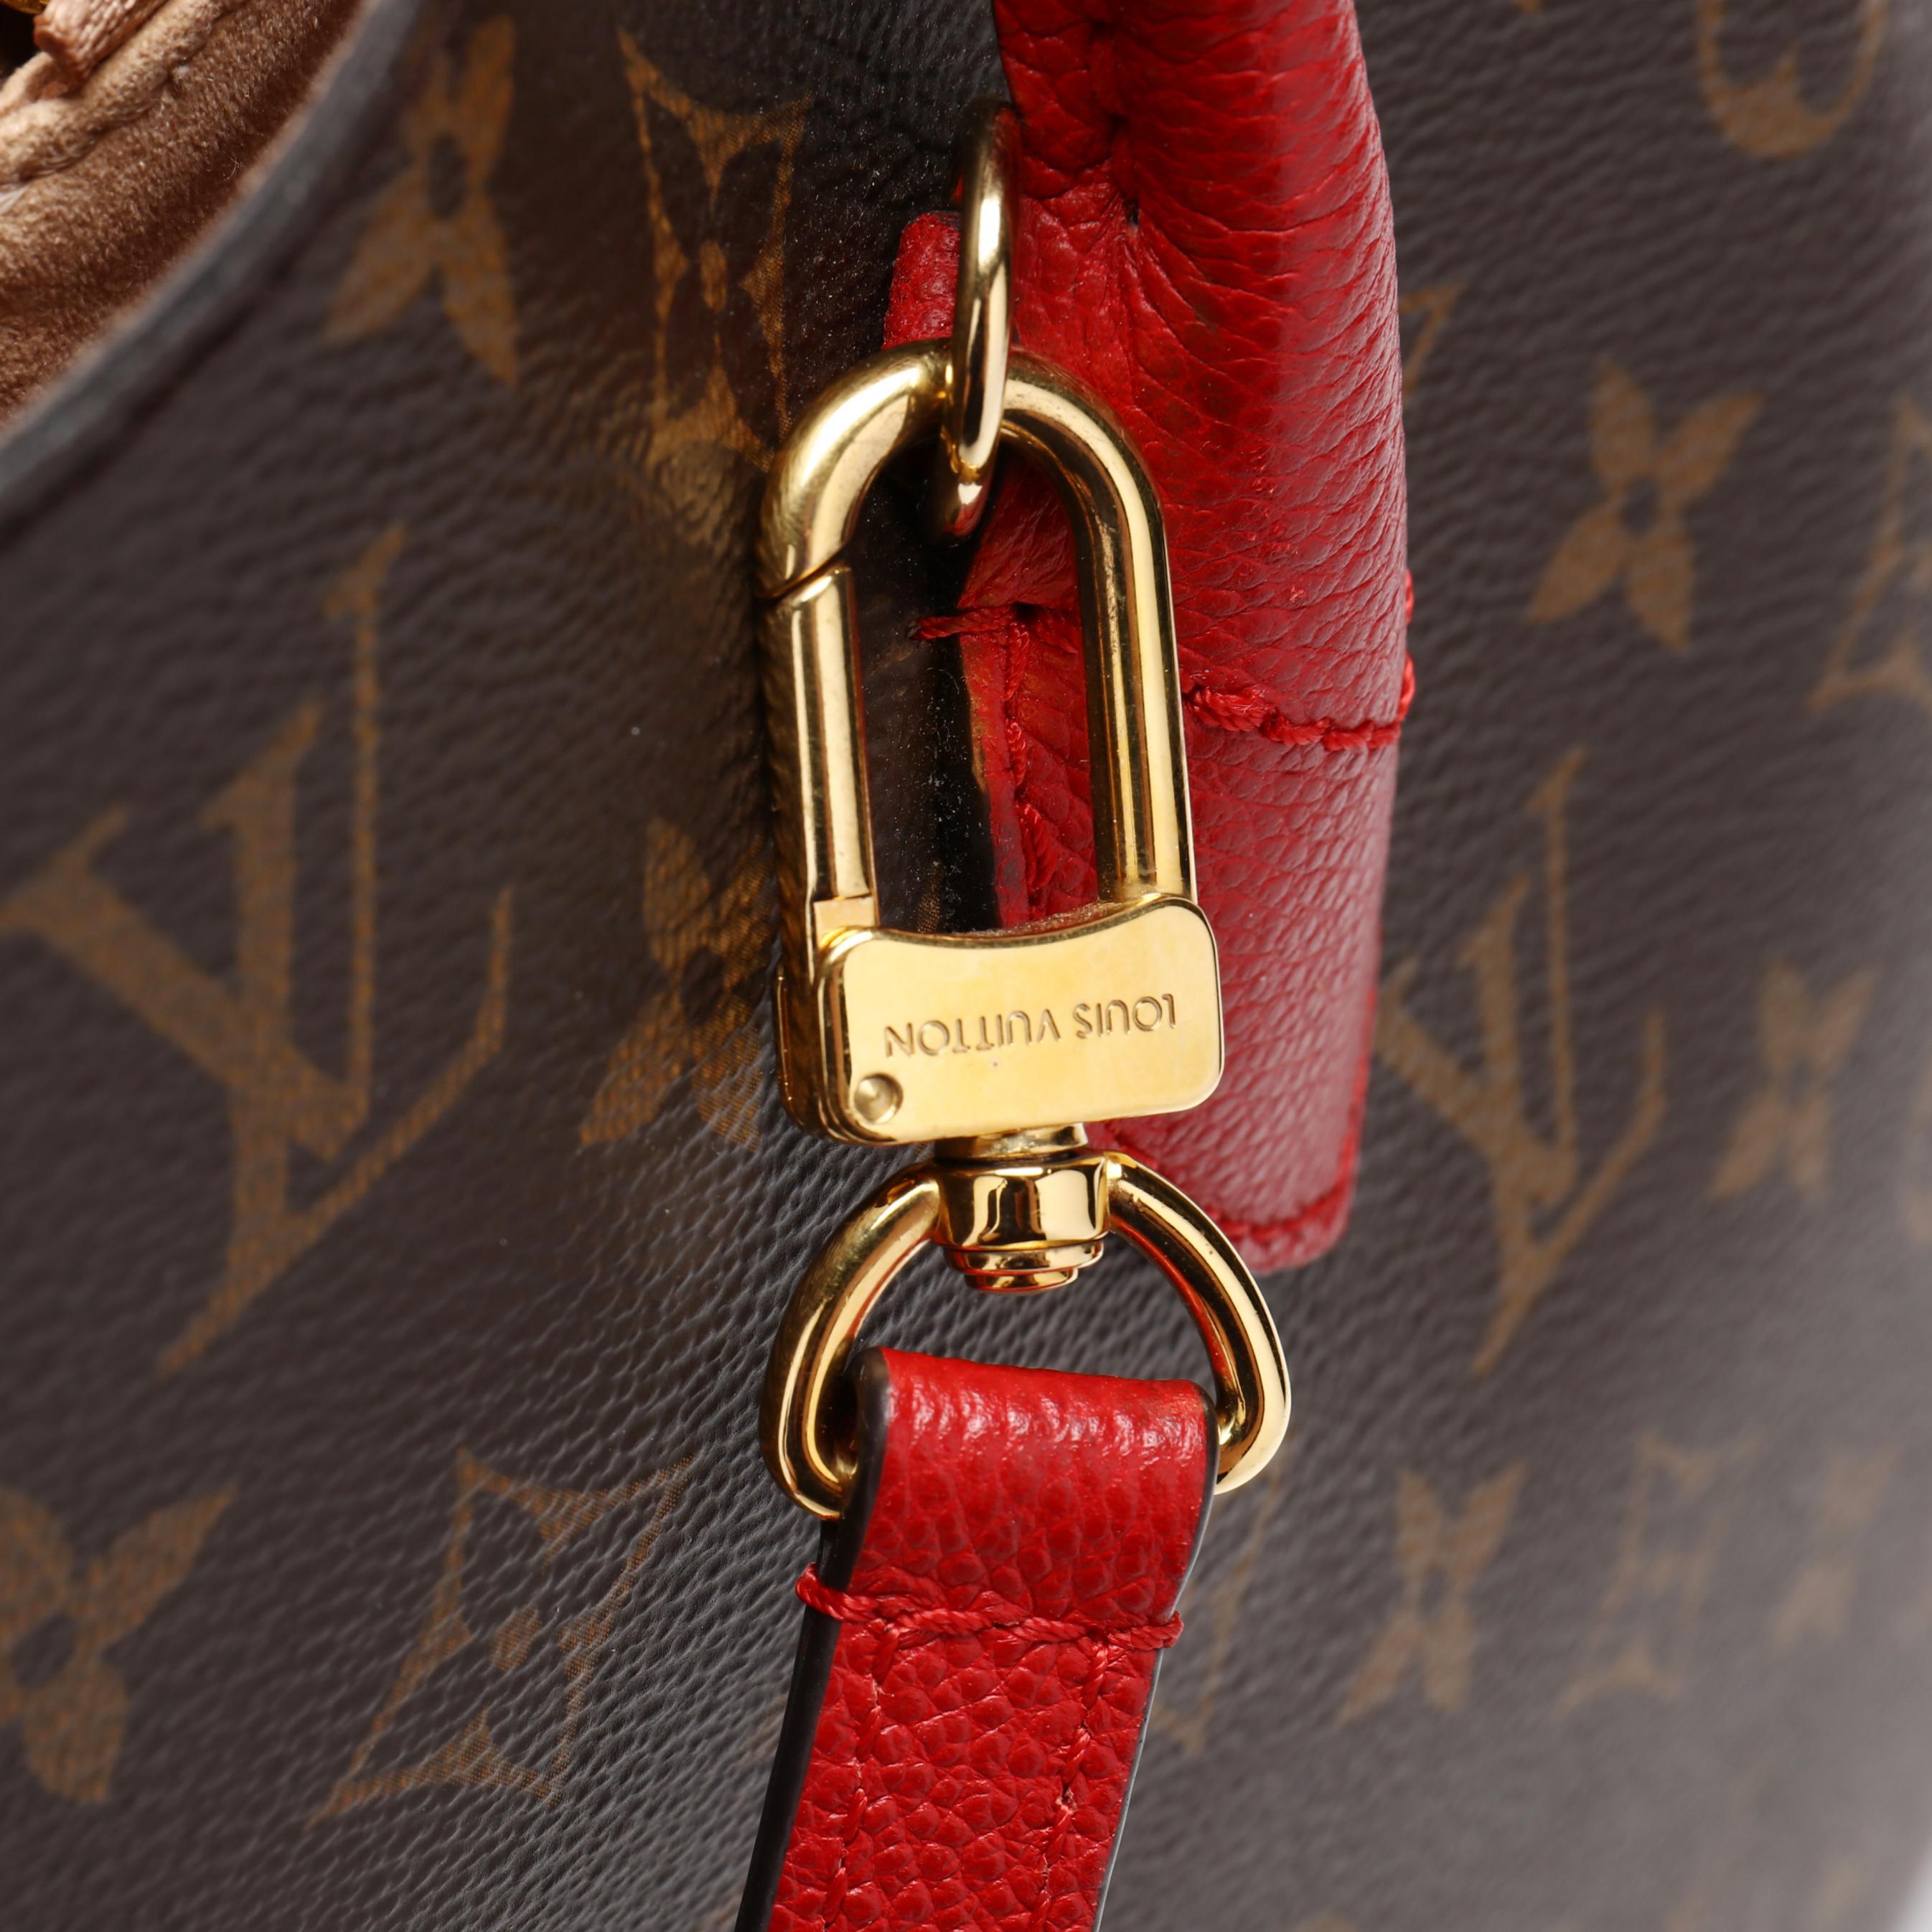 Louis Vuitton Flandrin Cherry Tote Bag (Lot 3006 - Luxury